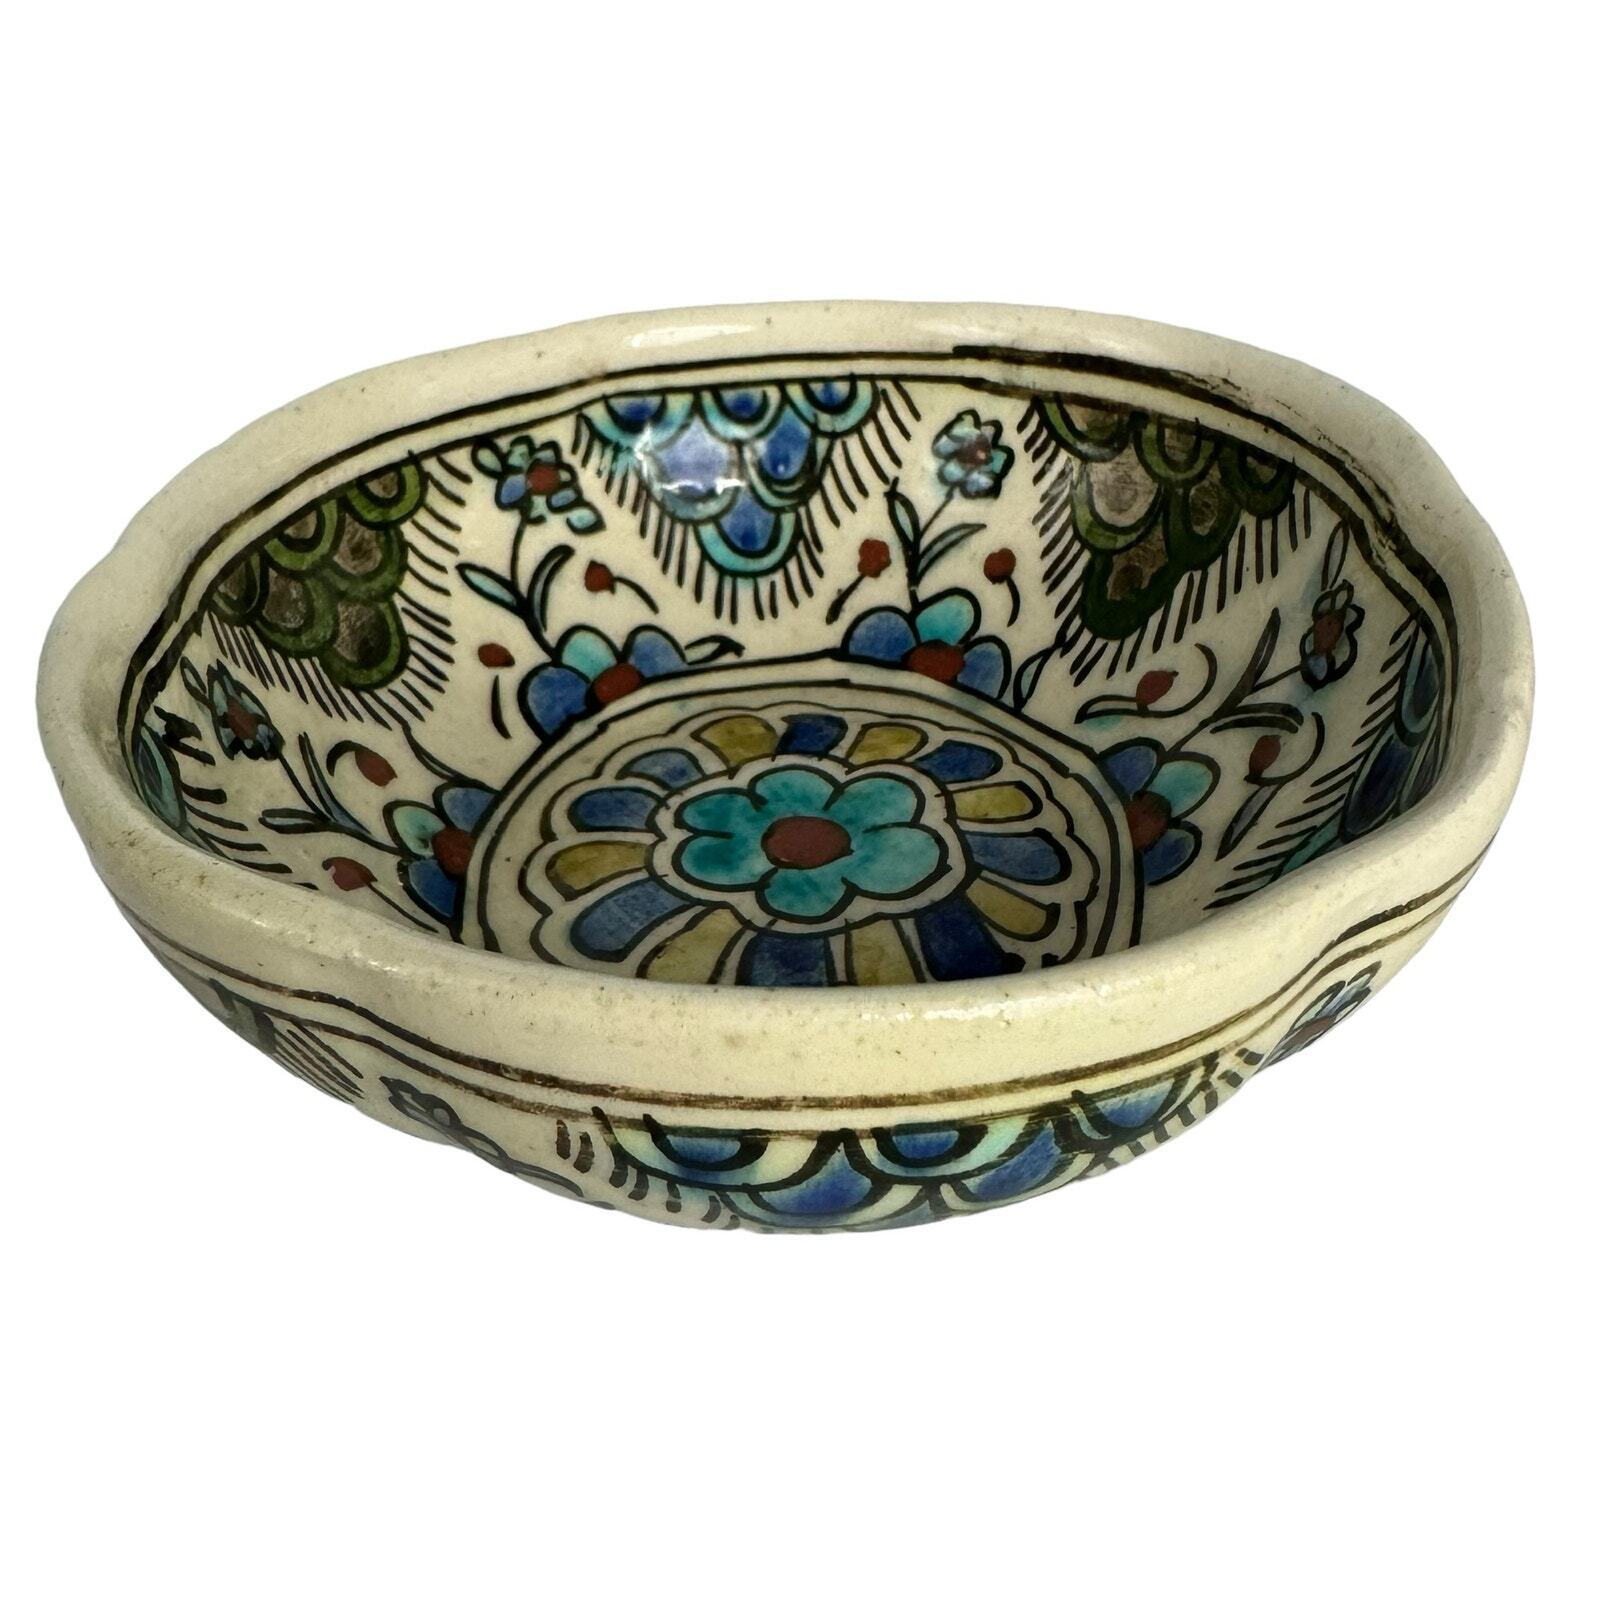 Ottoman Iznik Pottery Bowl Antique Vintage Persian Islamic Turkish